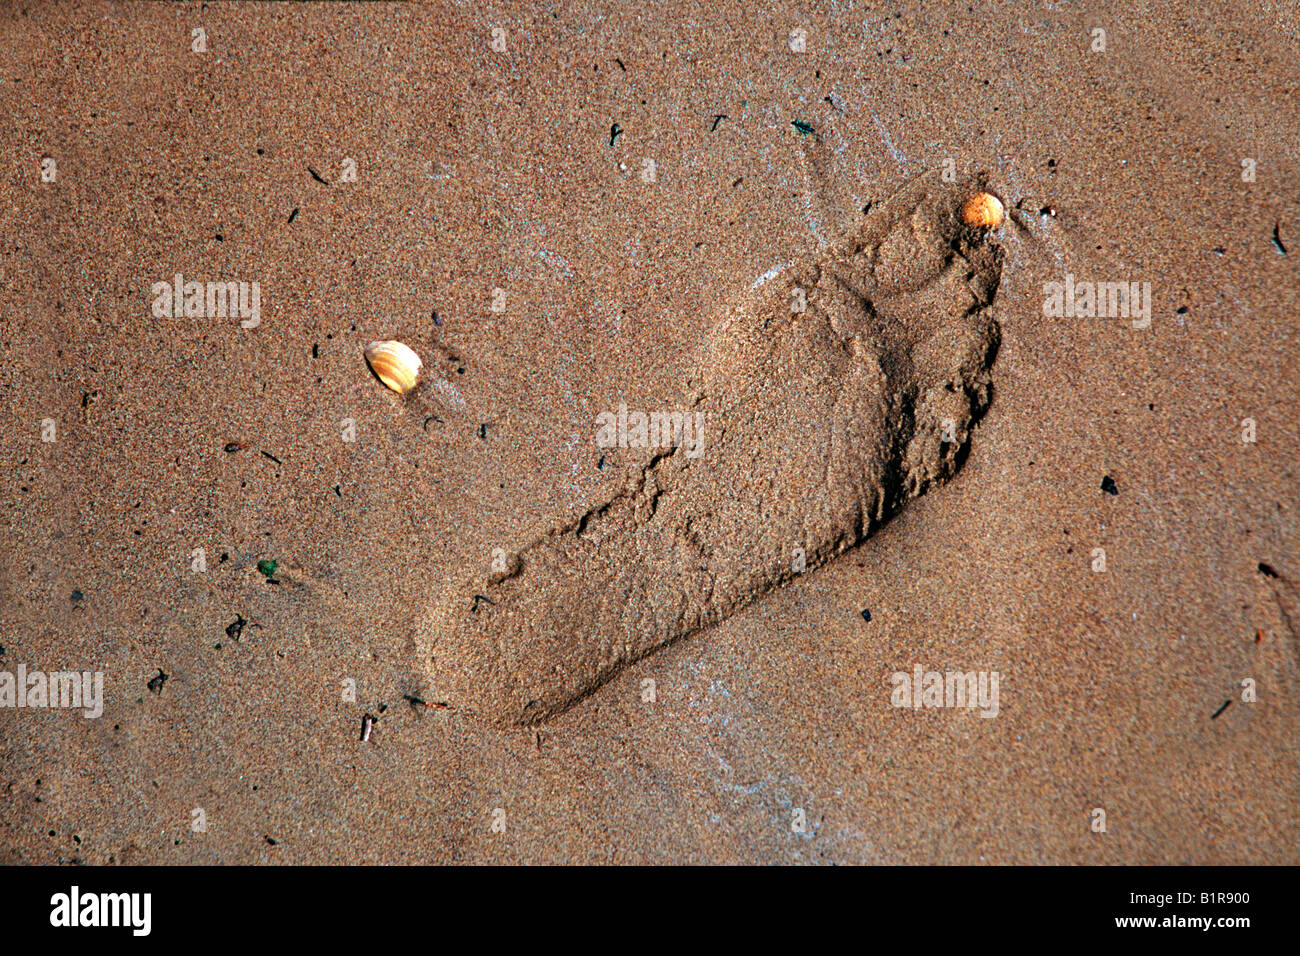 footprint on sand with shells around Stock Photo